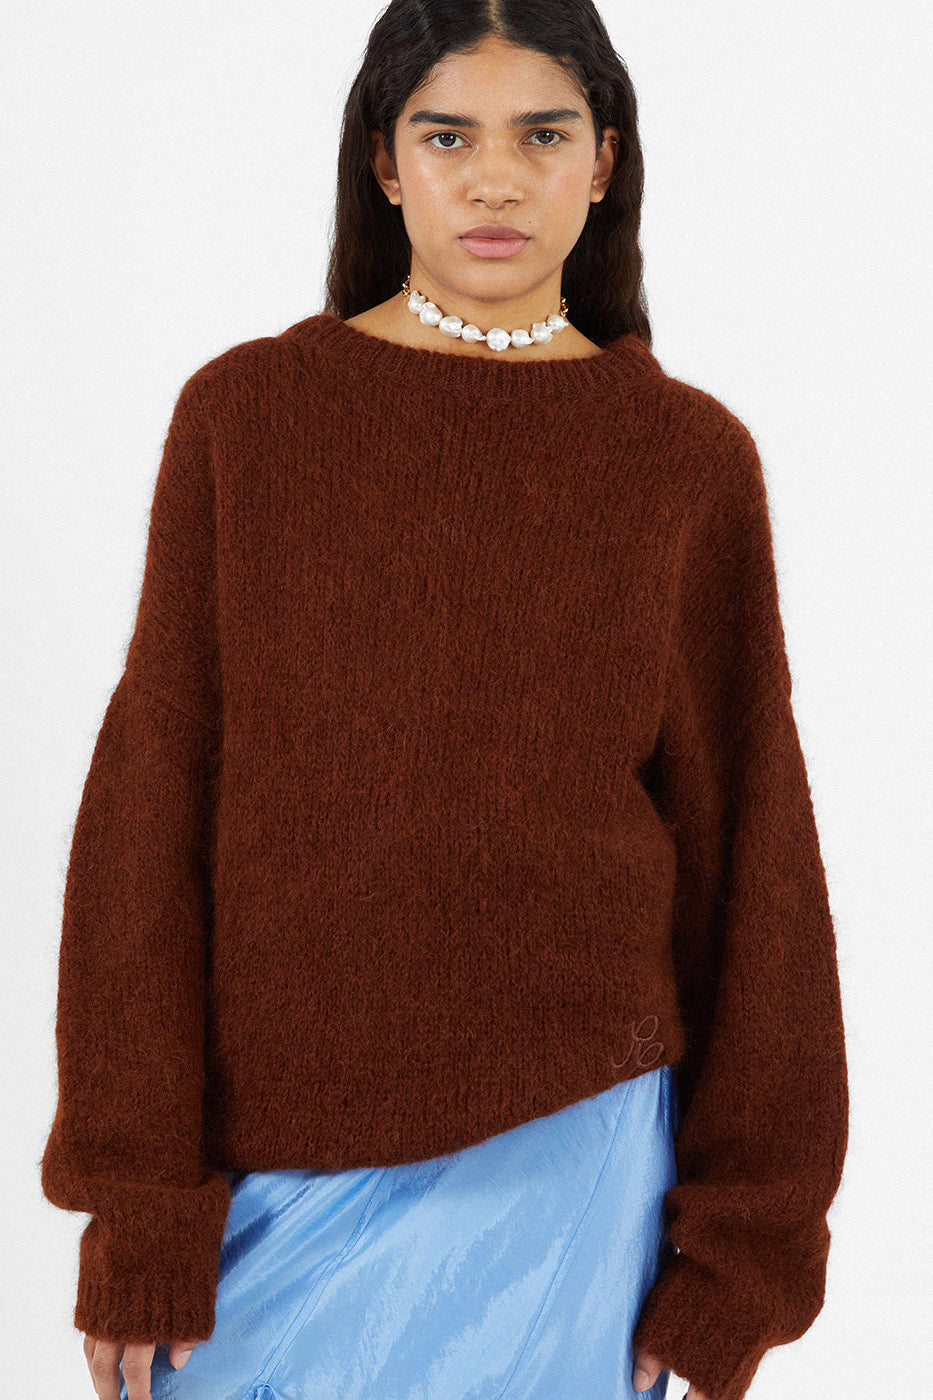 Toni Sweater in Brown Alpaca Blend by Rejina Pyo